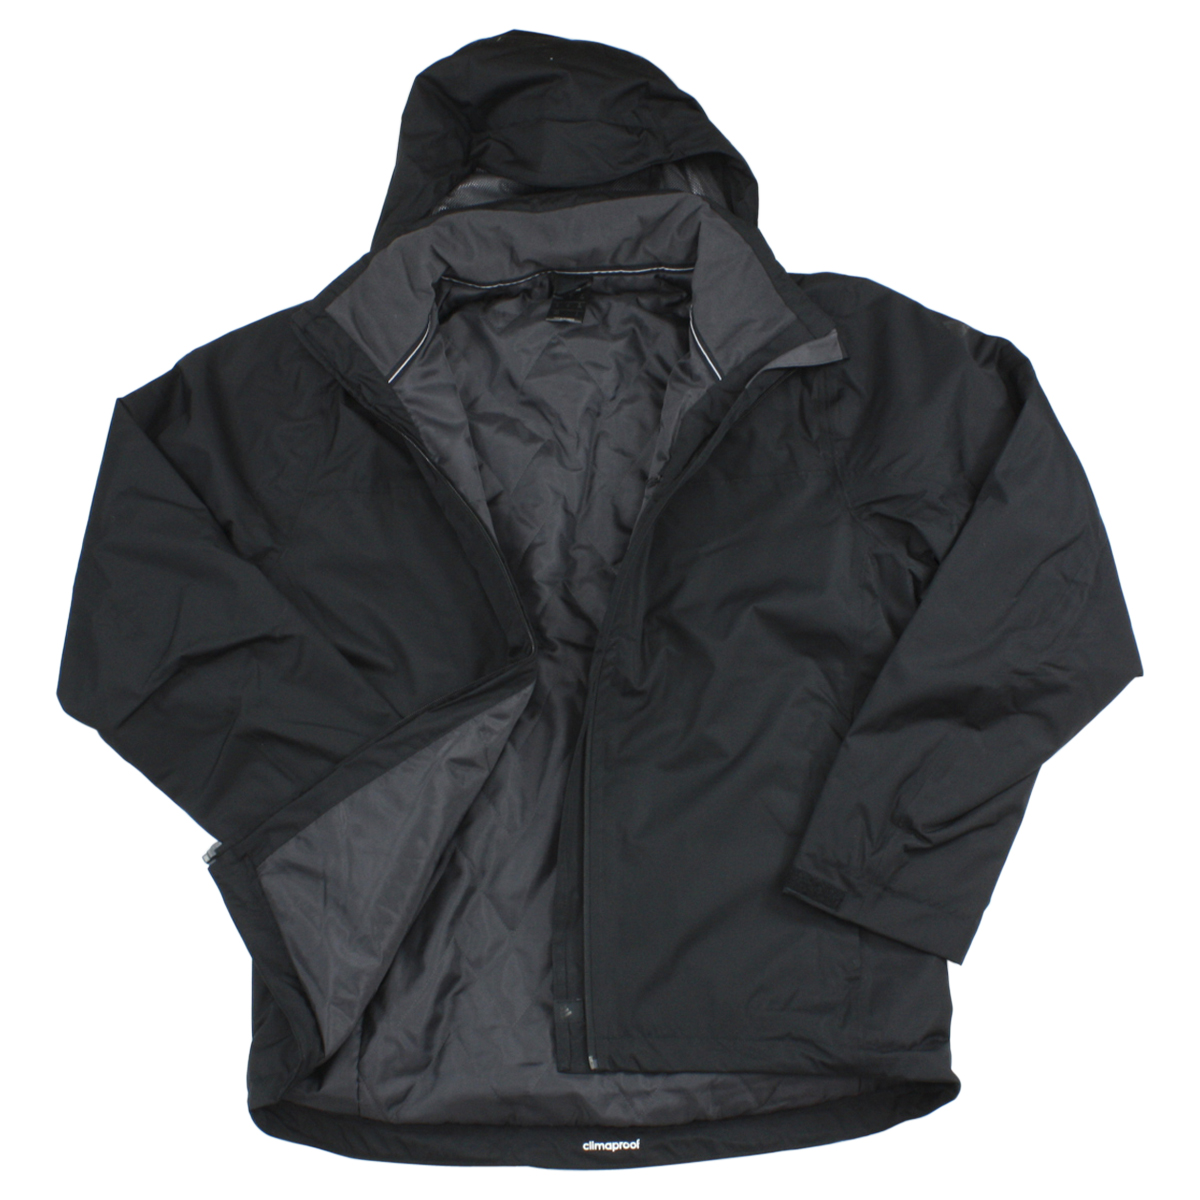 Adidas Men's Wandertag Climaproof Insulated Hooded Winter Jacket - Black - Medium